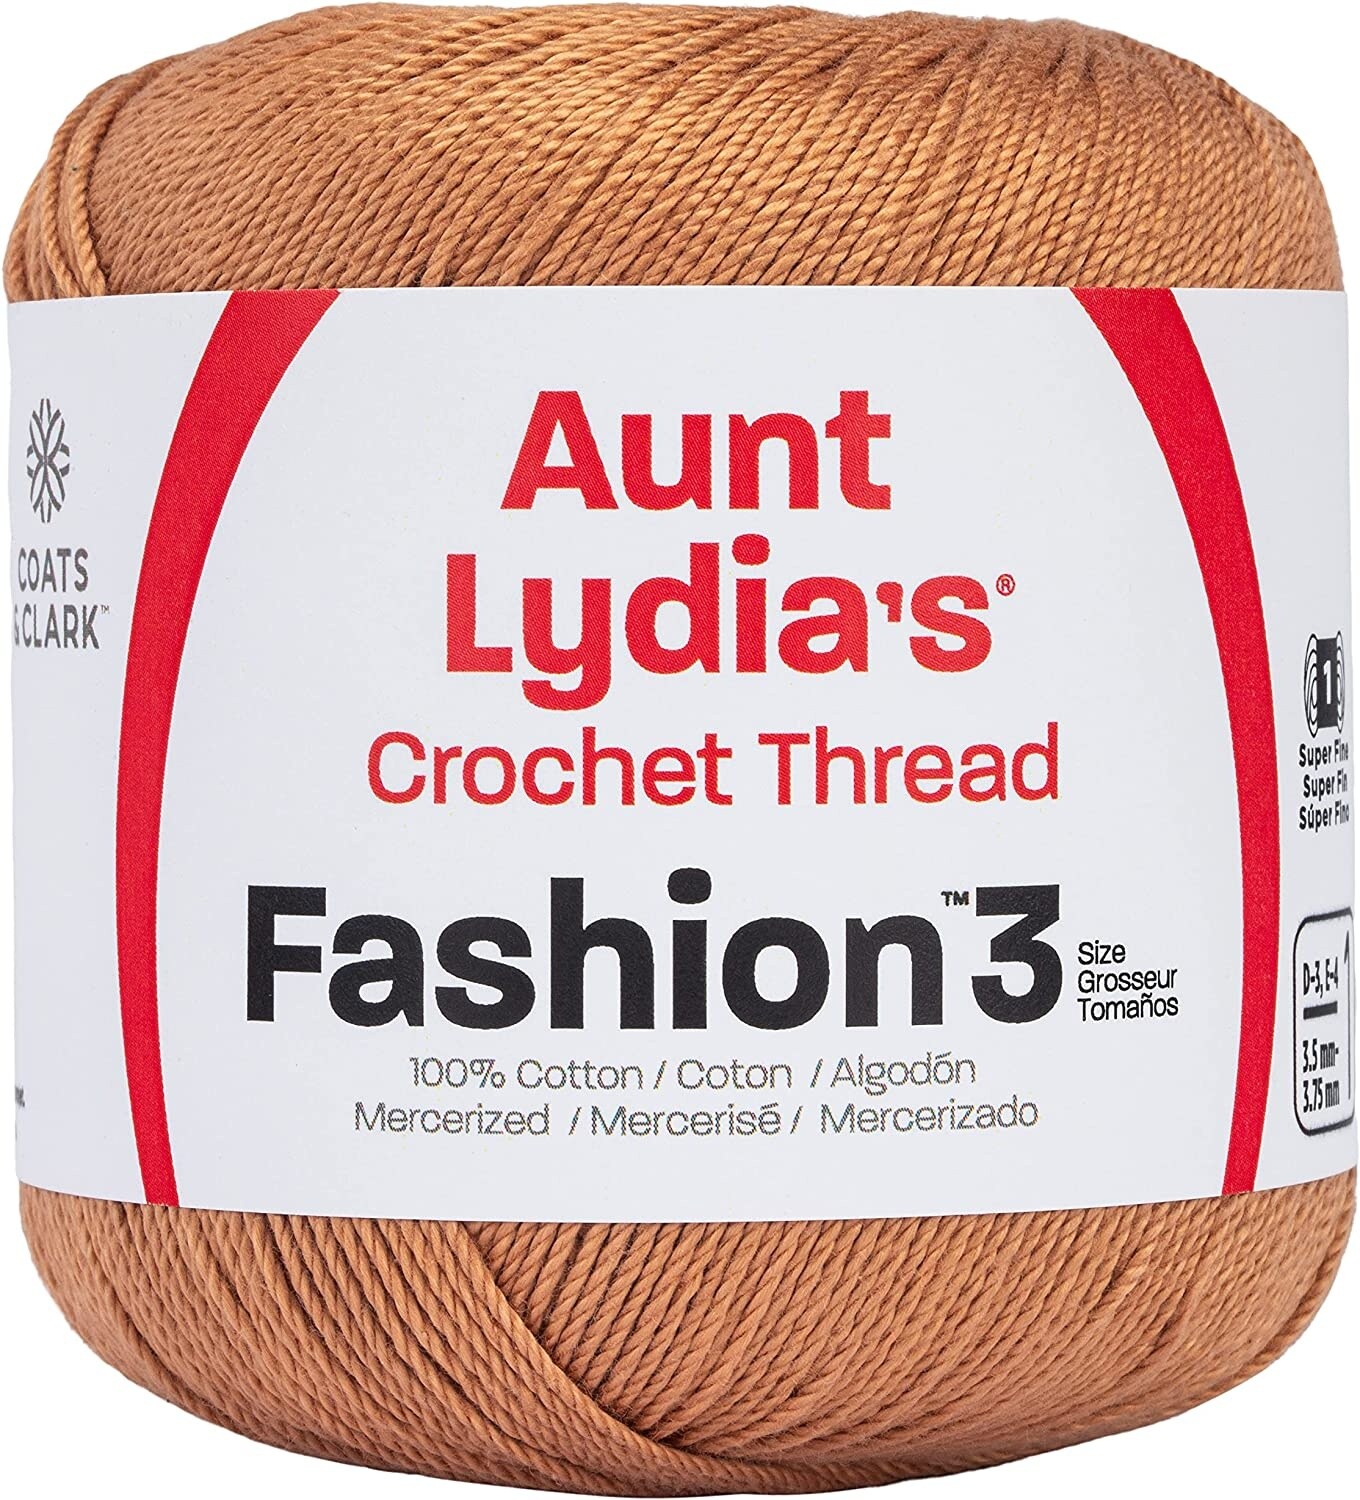 Aunt Lydia's Fashion Crochet Thread Size 3 Copper Mist